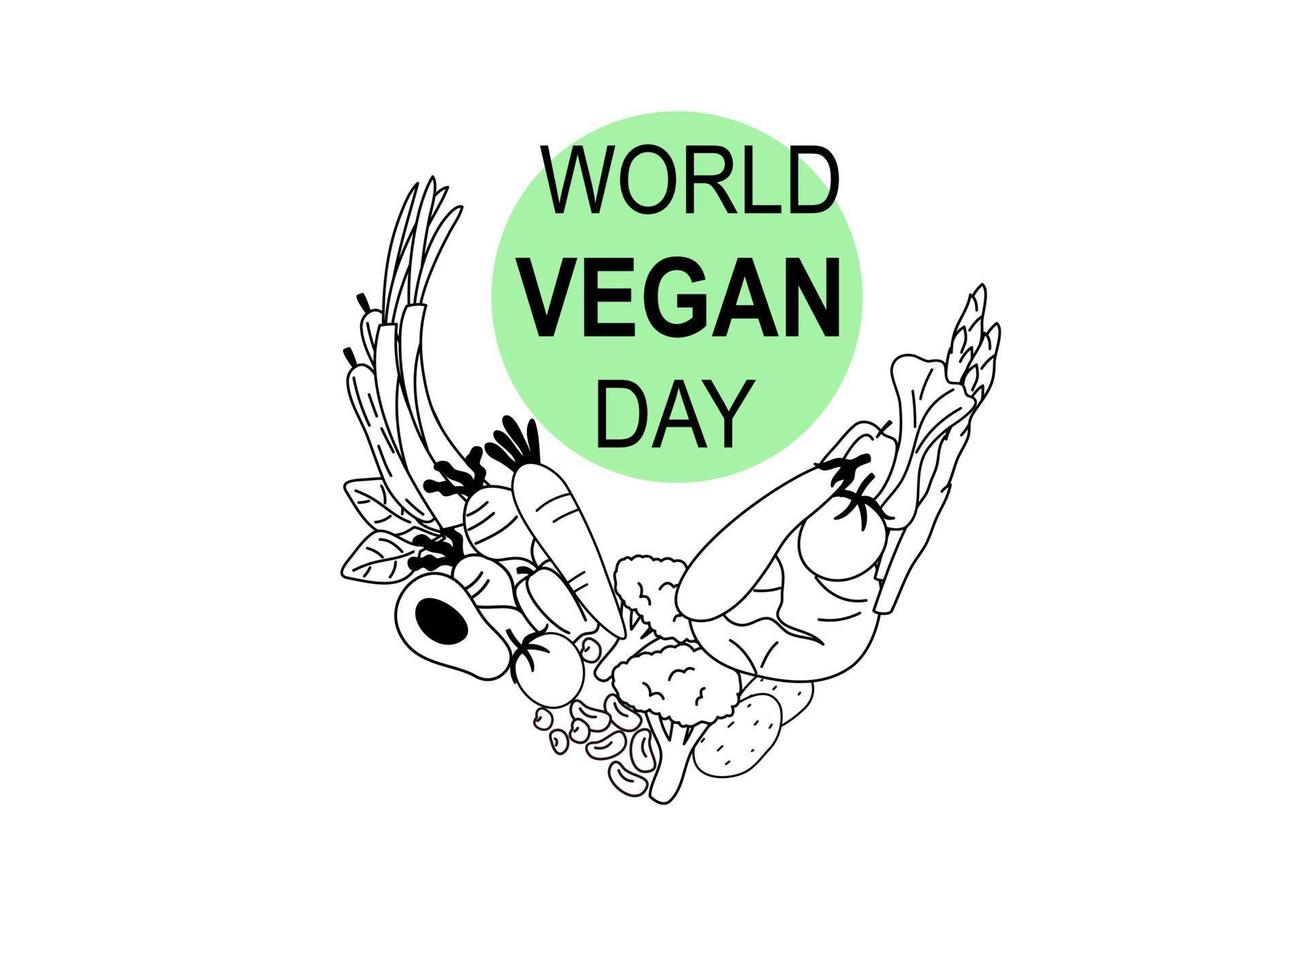 día vegano celebrado, diseño para afiches, pancartas y logotipos. línea e ilustración vectorial plana. vector